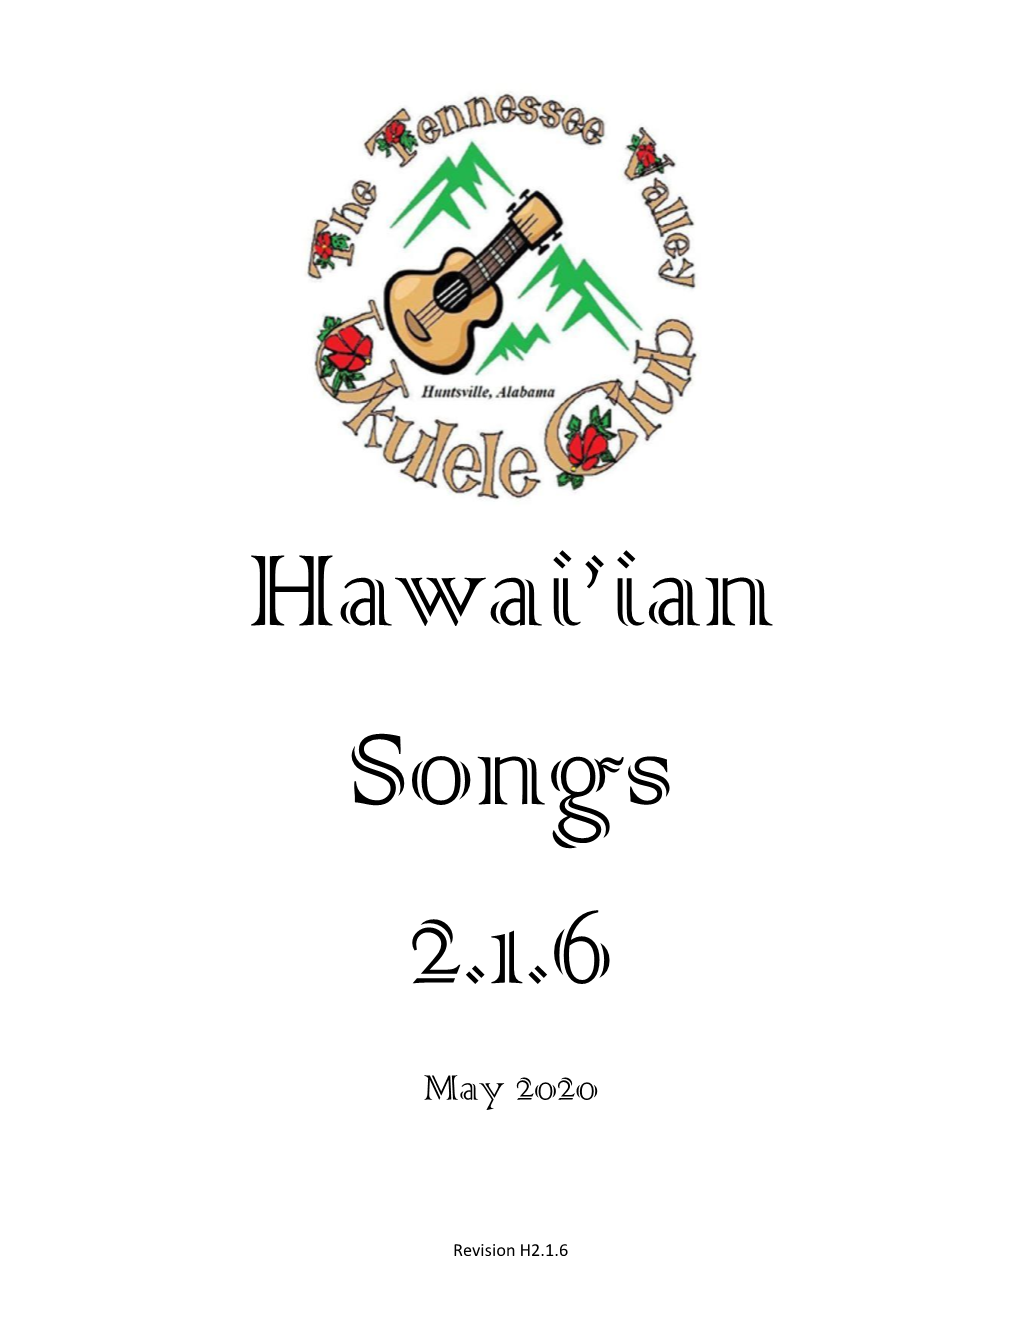 Hawai'ian Songs, Version 2.1.6